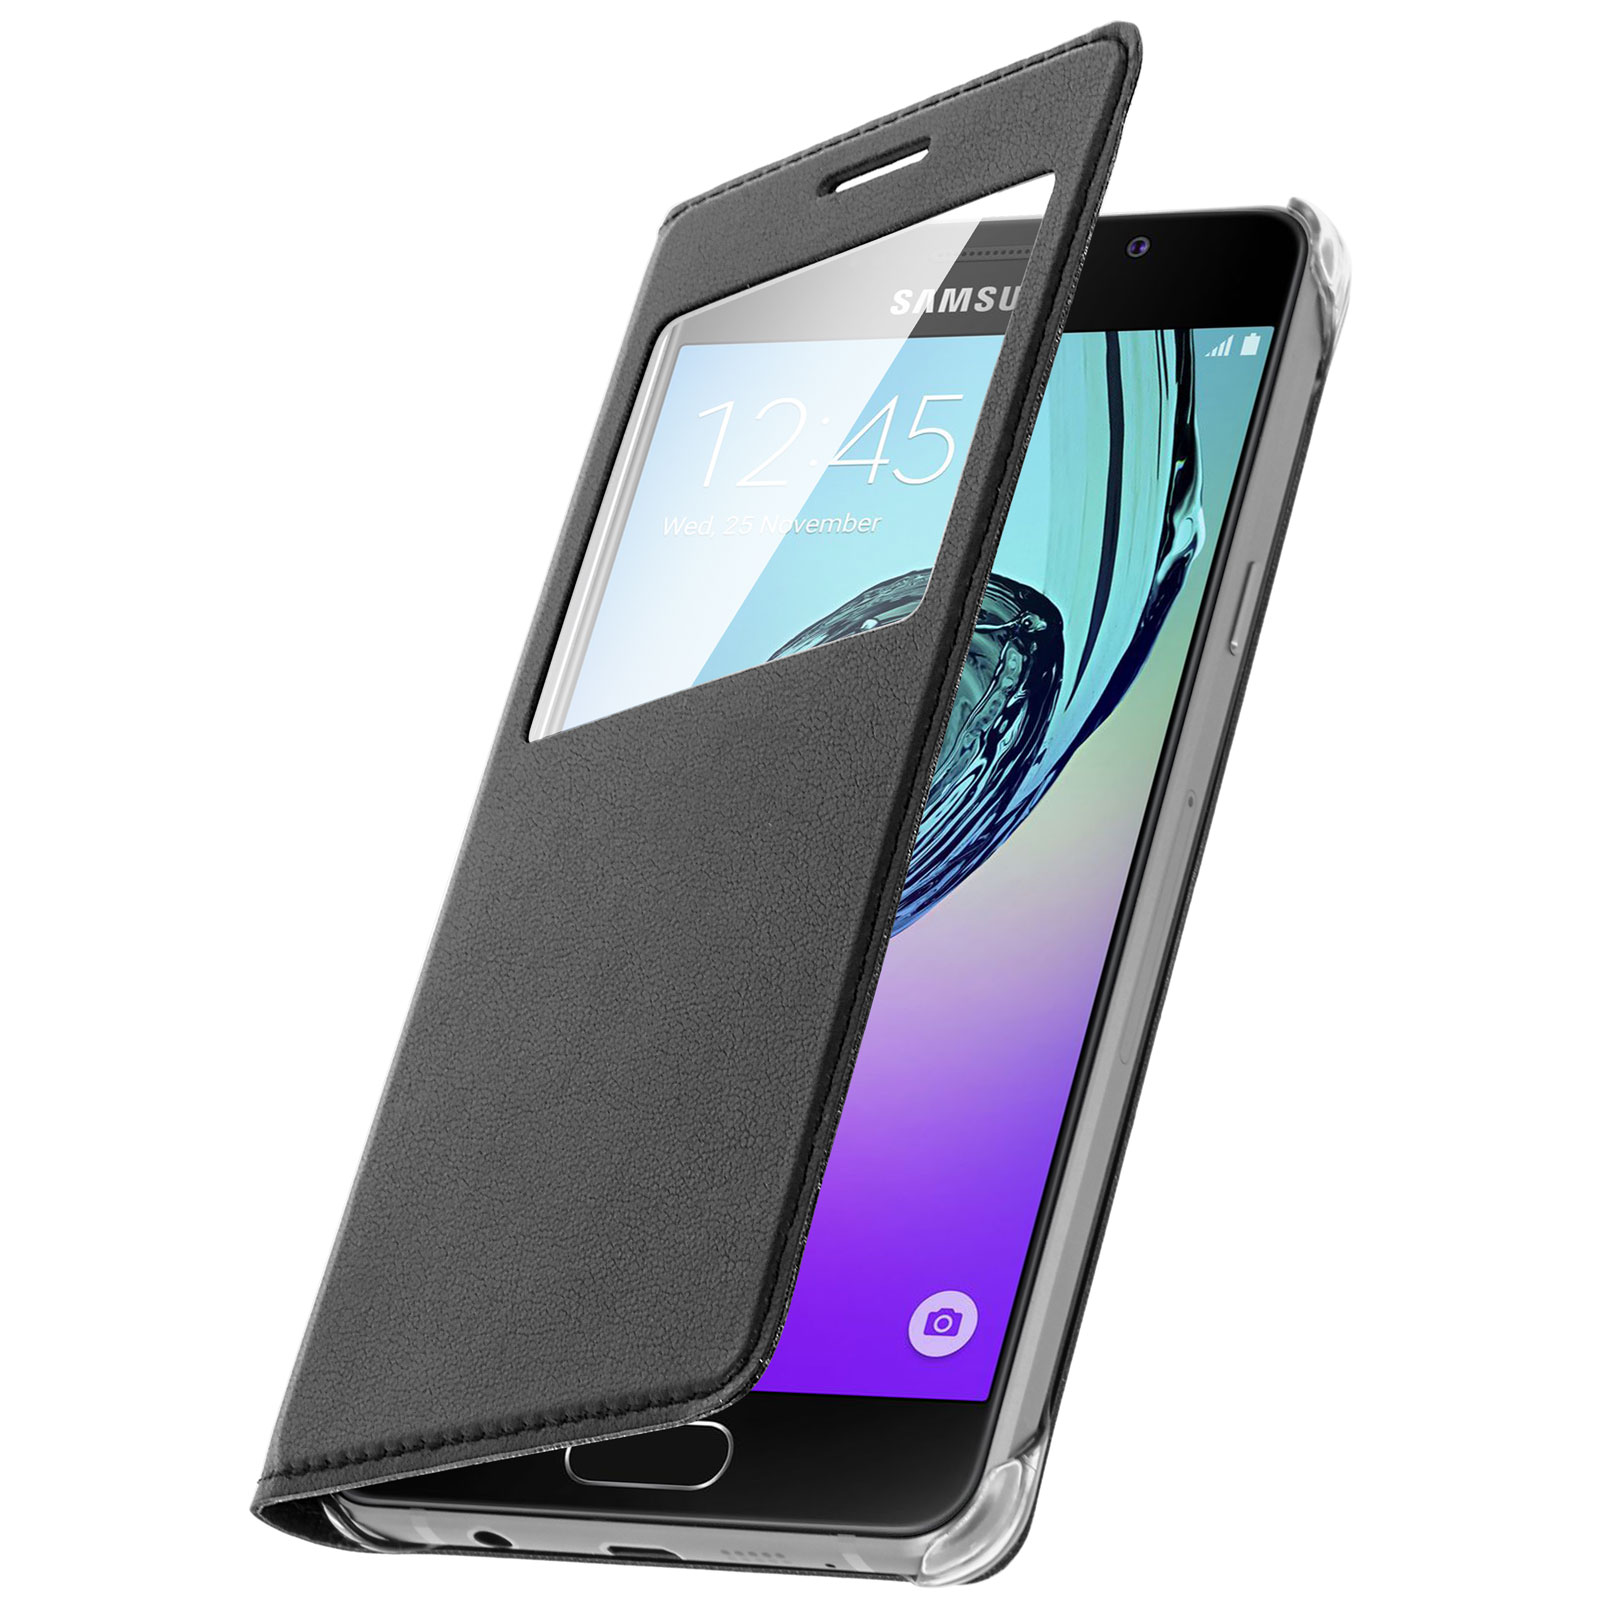 Verbieden Verschrikking Origineel Housse, Etui folio S-View à fenêtre pour Samsung Galaxy A5 2016 - Noir -  Français